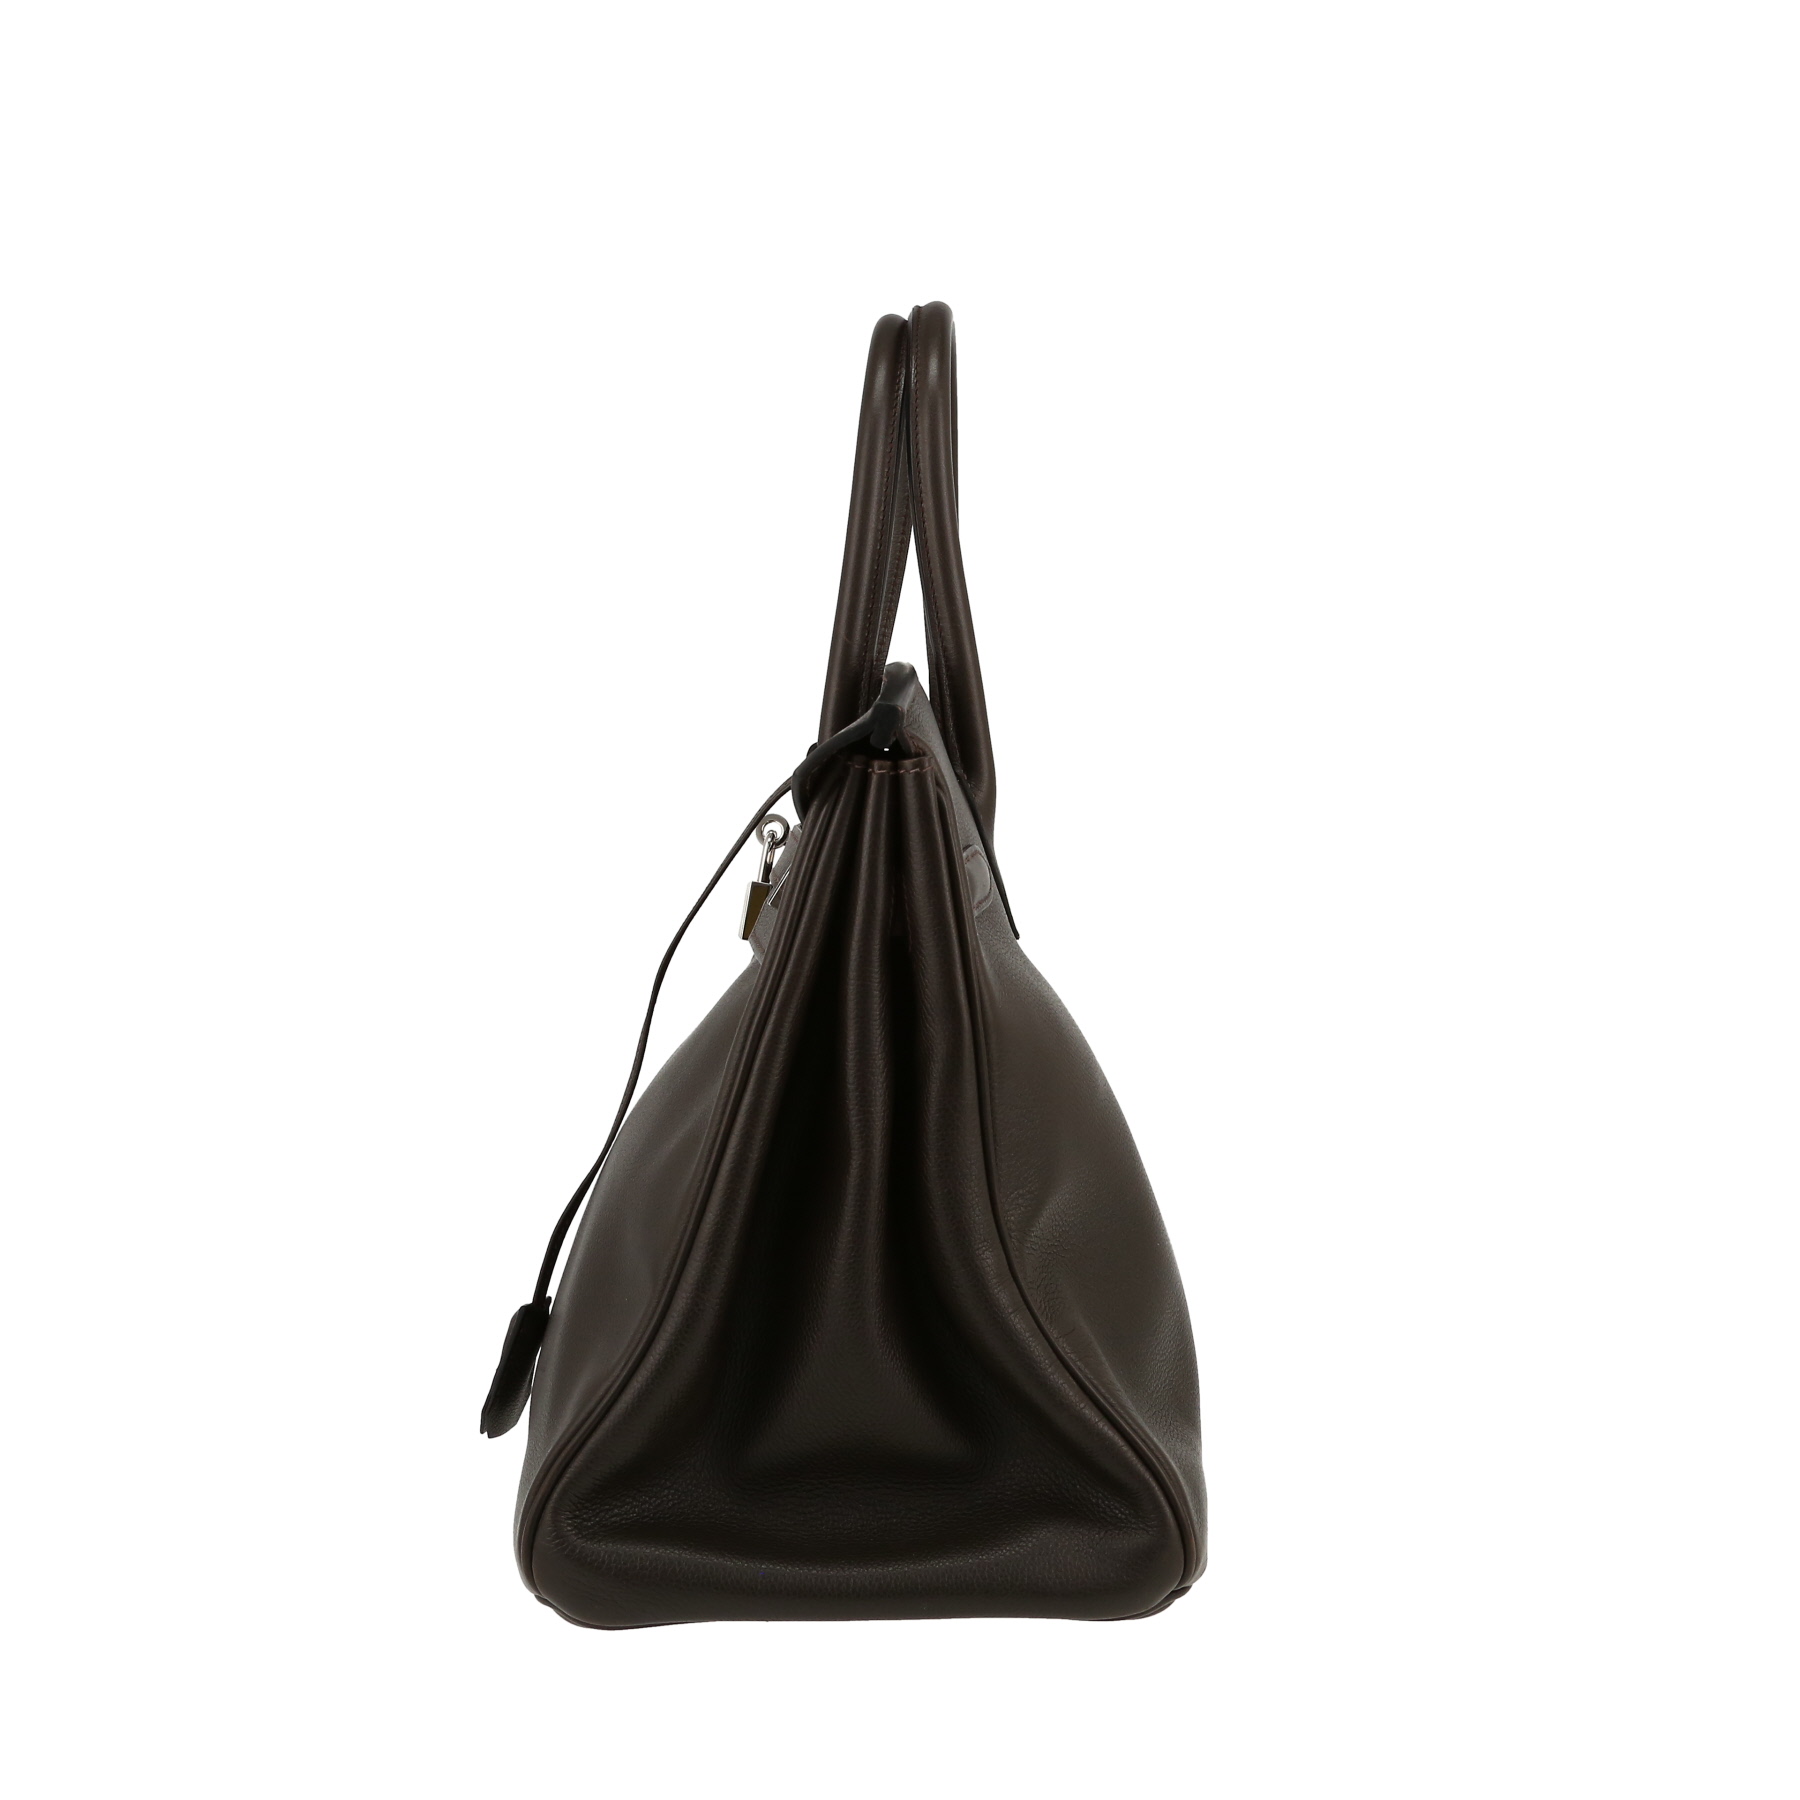 Birkin 35 cm Handbag In Brown Togo Leather